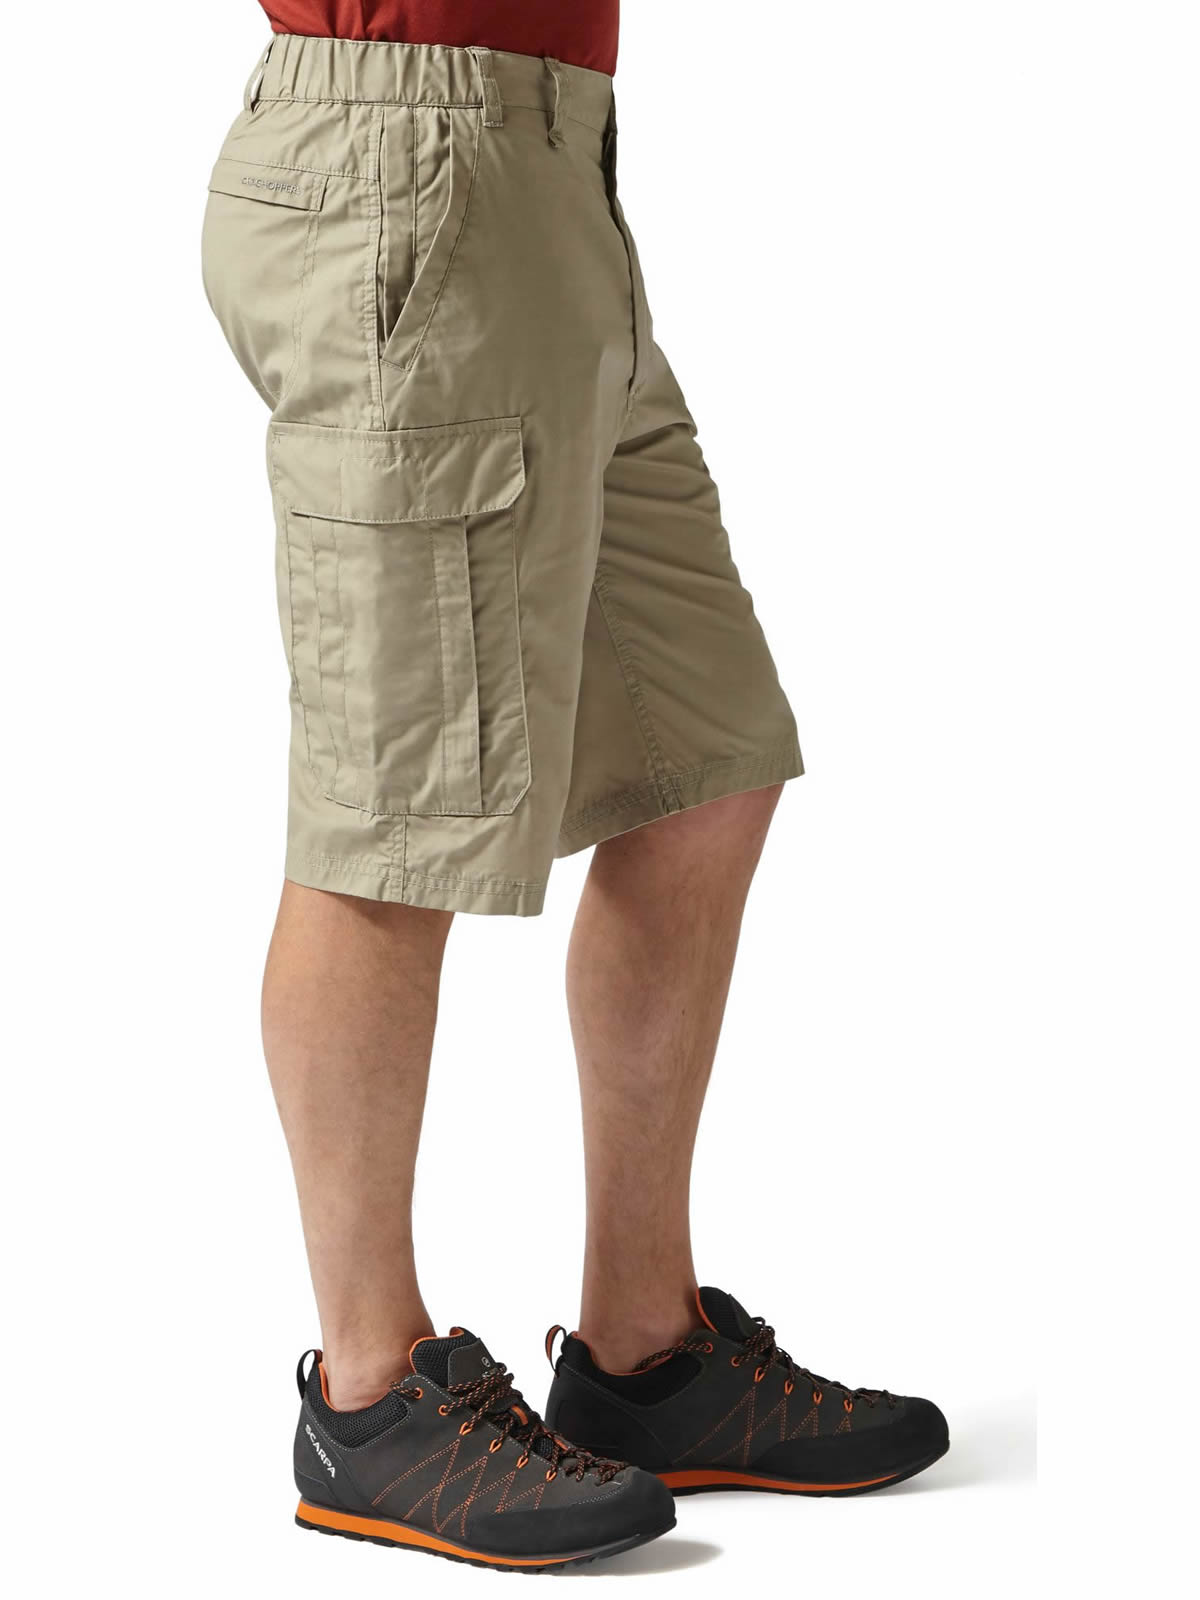 Craghoppers Kiwi Mens Kiwi Long Length Shorts CG293 